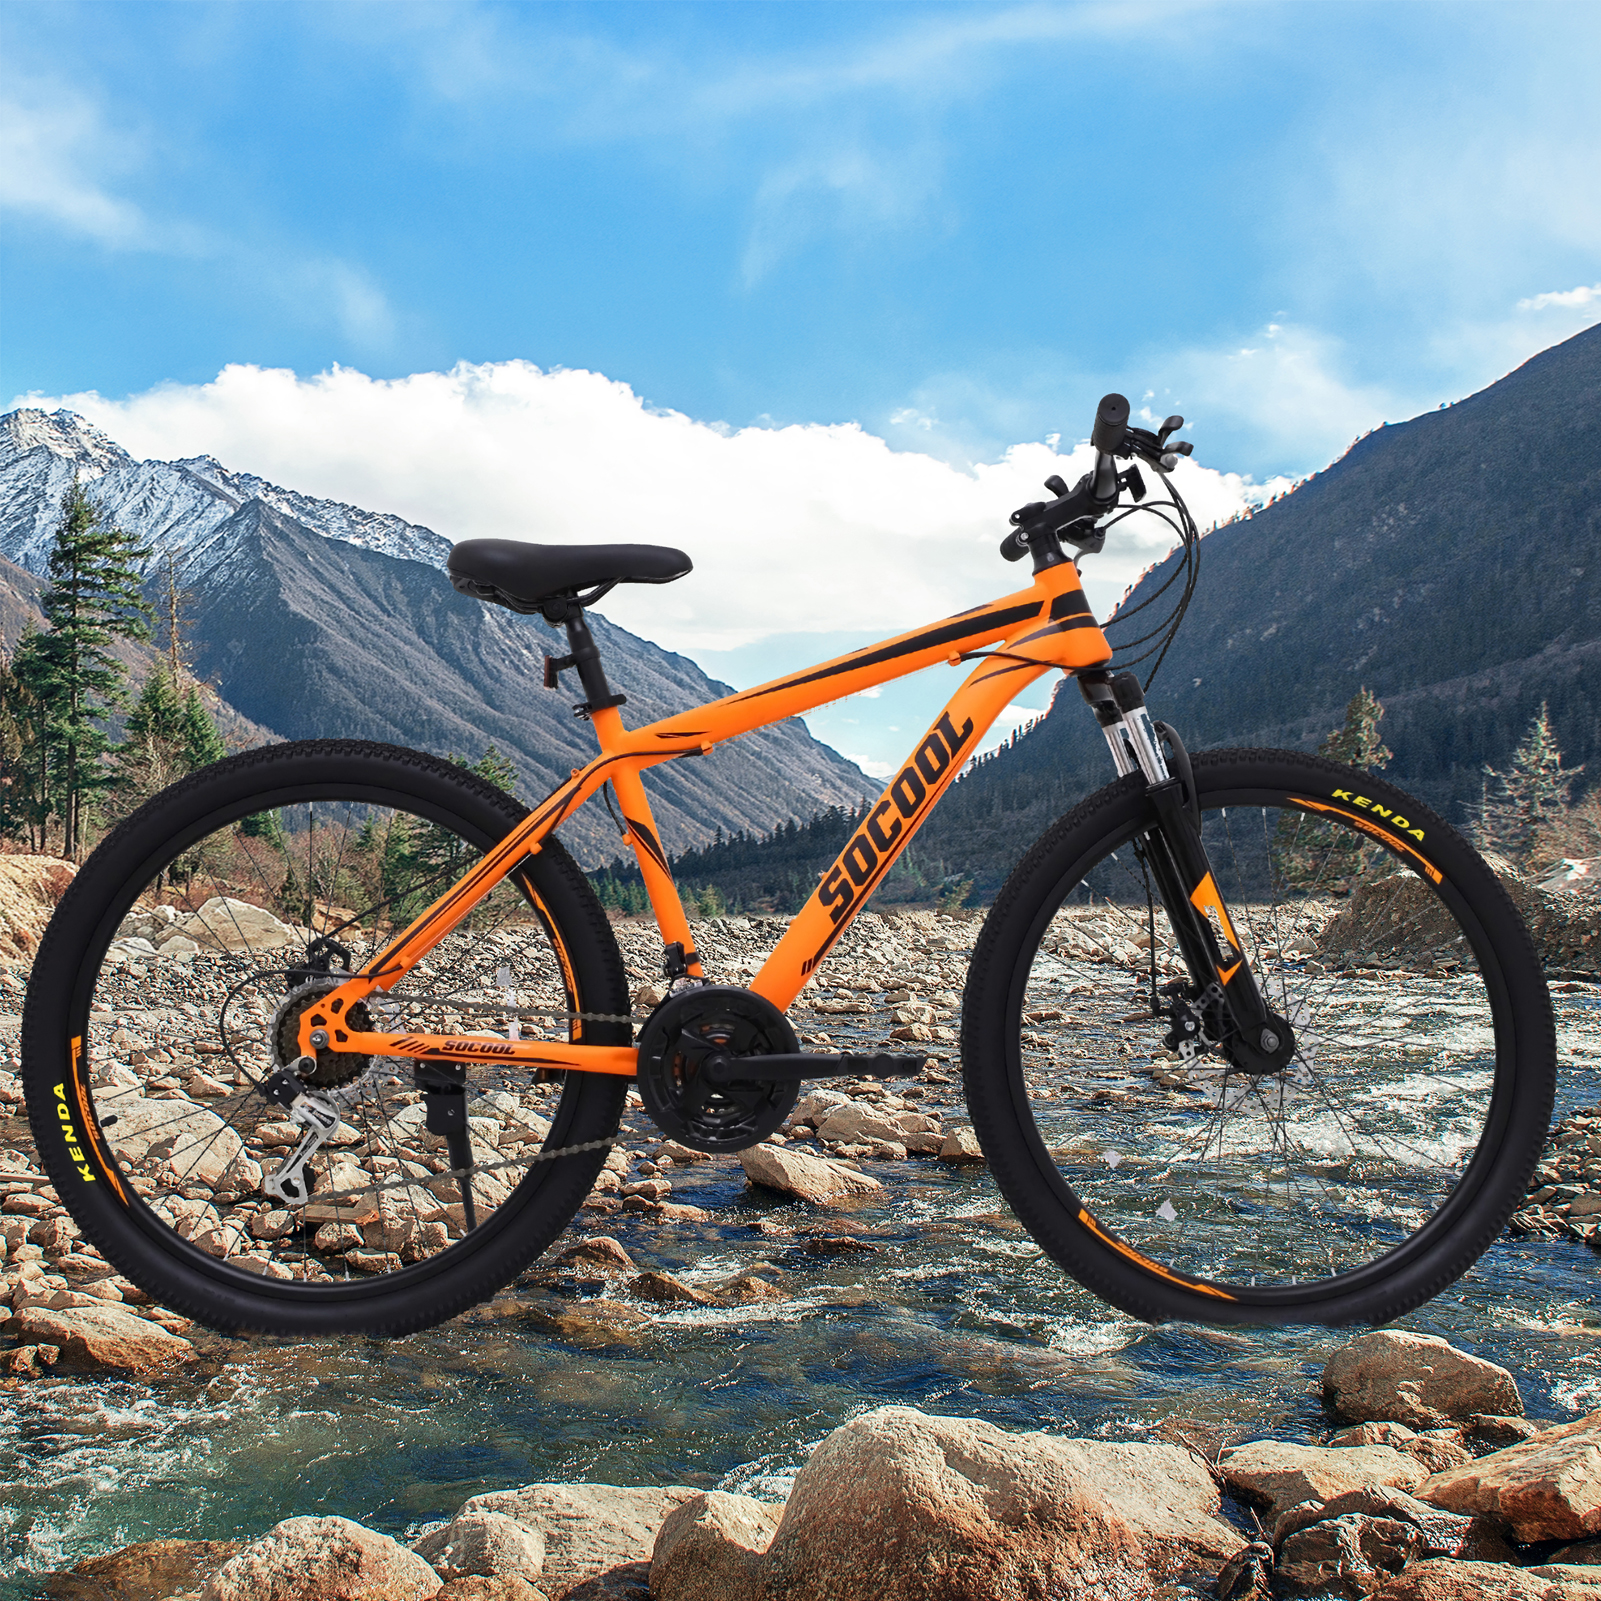 SOCOOL Mens and Womens Road Bike, 26-Inch Wheels, Lightweight Aluminum Frame -Orange & Black, ZA454BK - image 2 of 9